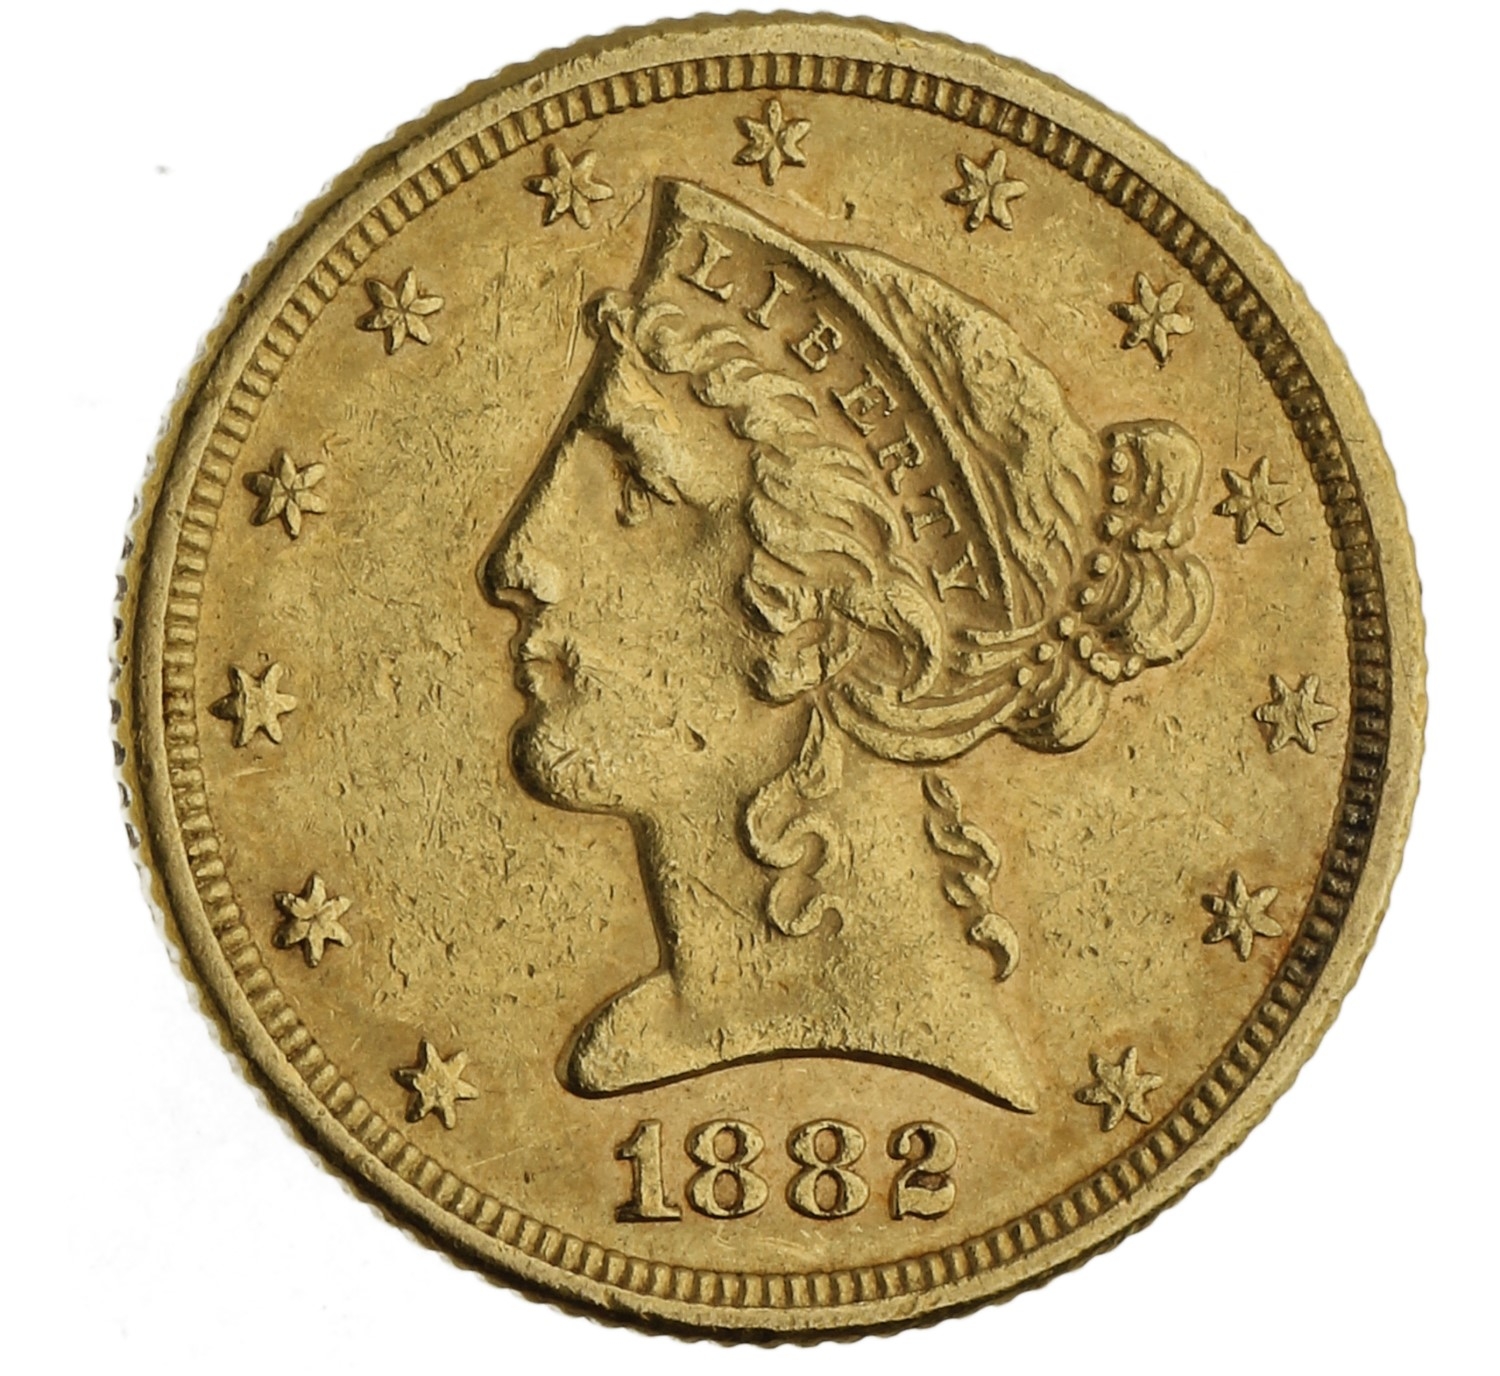 5 Dollars - USA - 1882